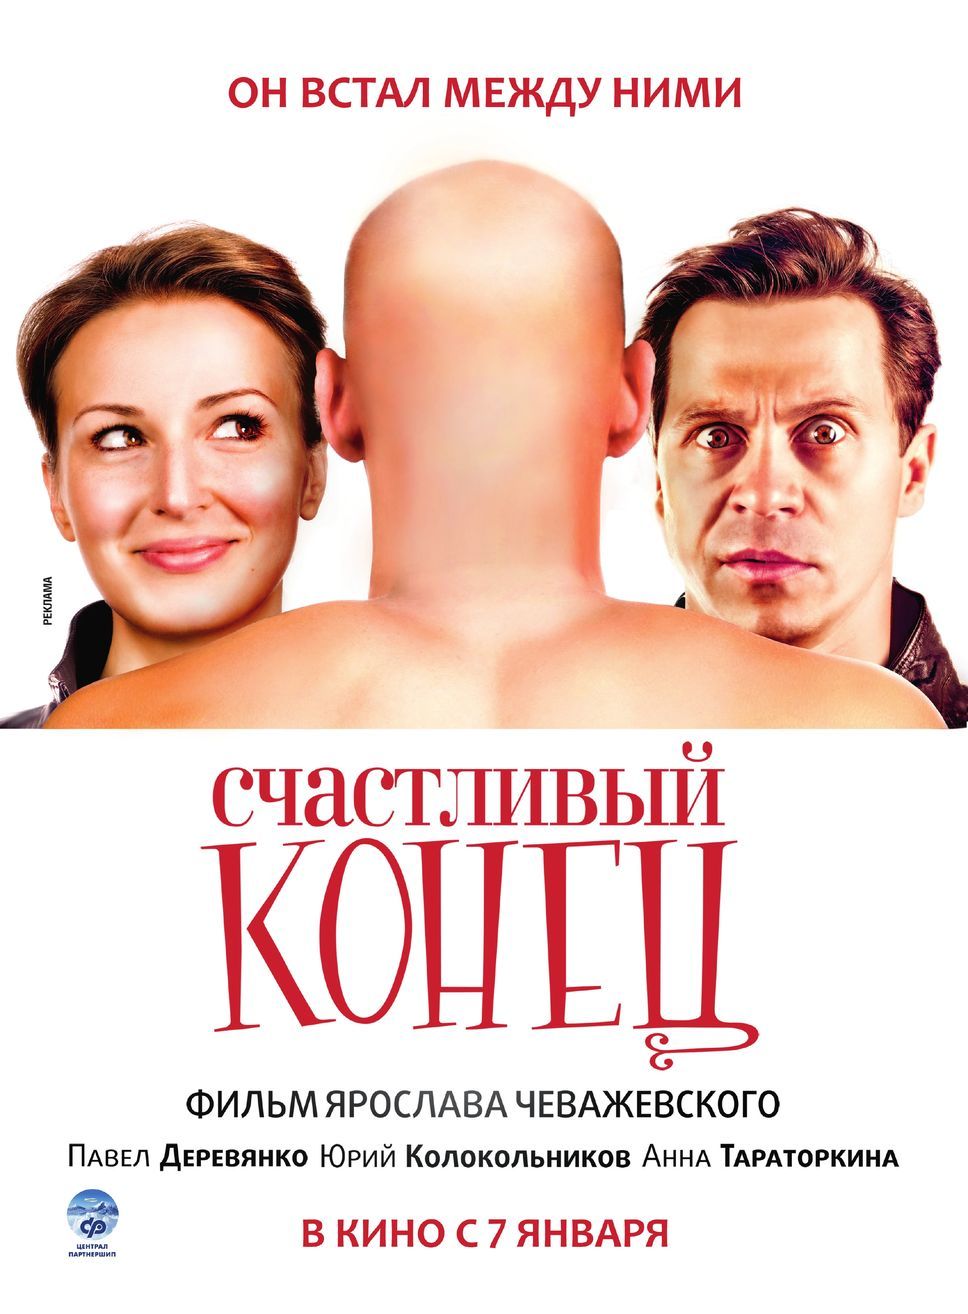 http://www.kinogallery.com/kino/kinogallery.com_schastlivyjkonec_poster_1.jpg